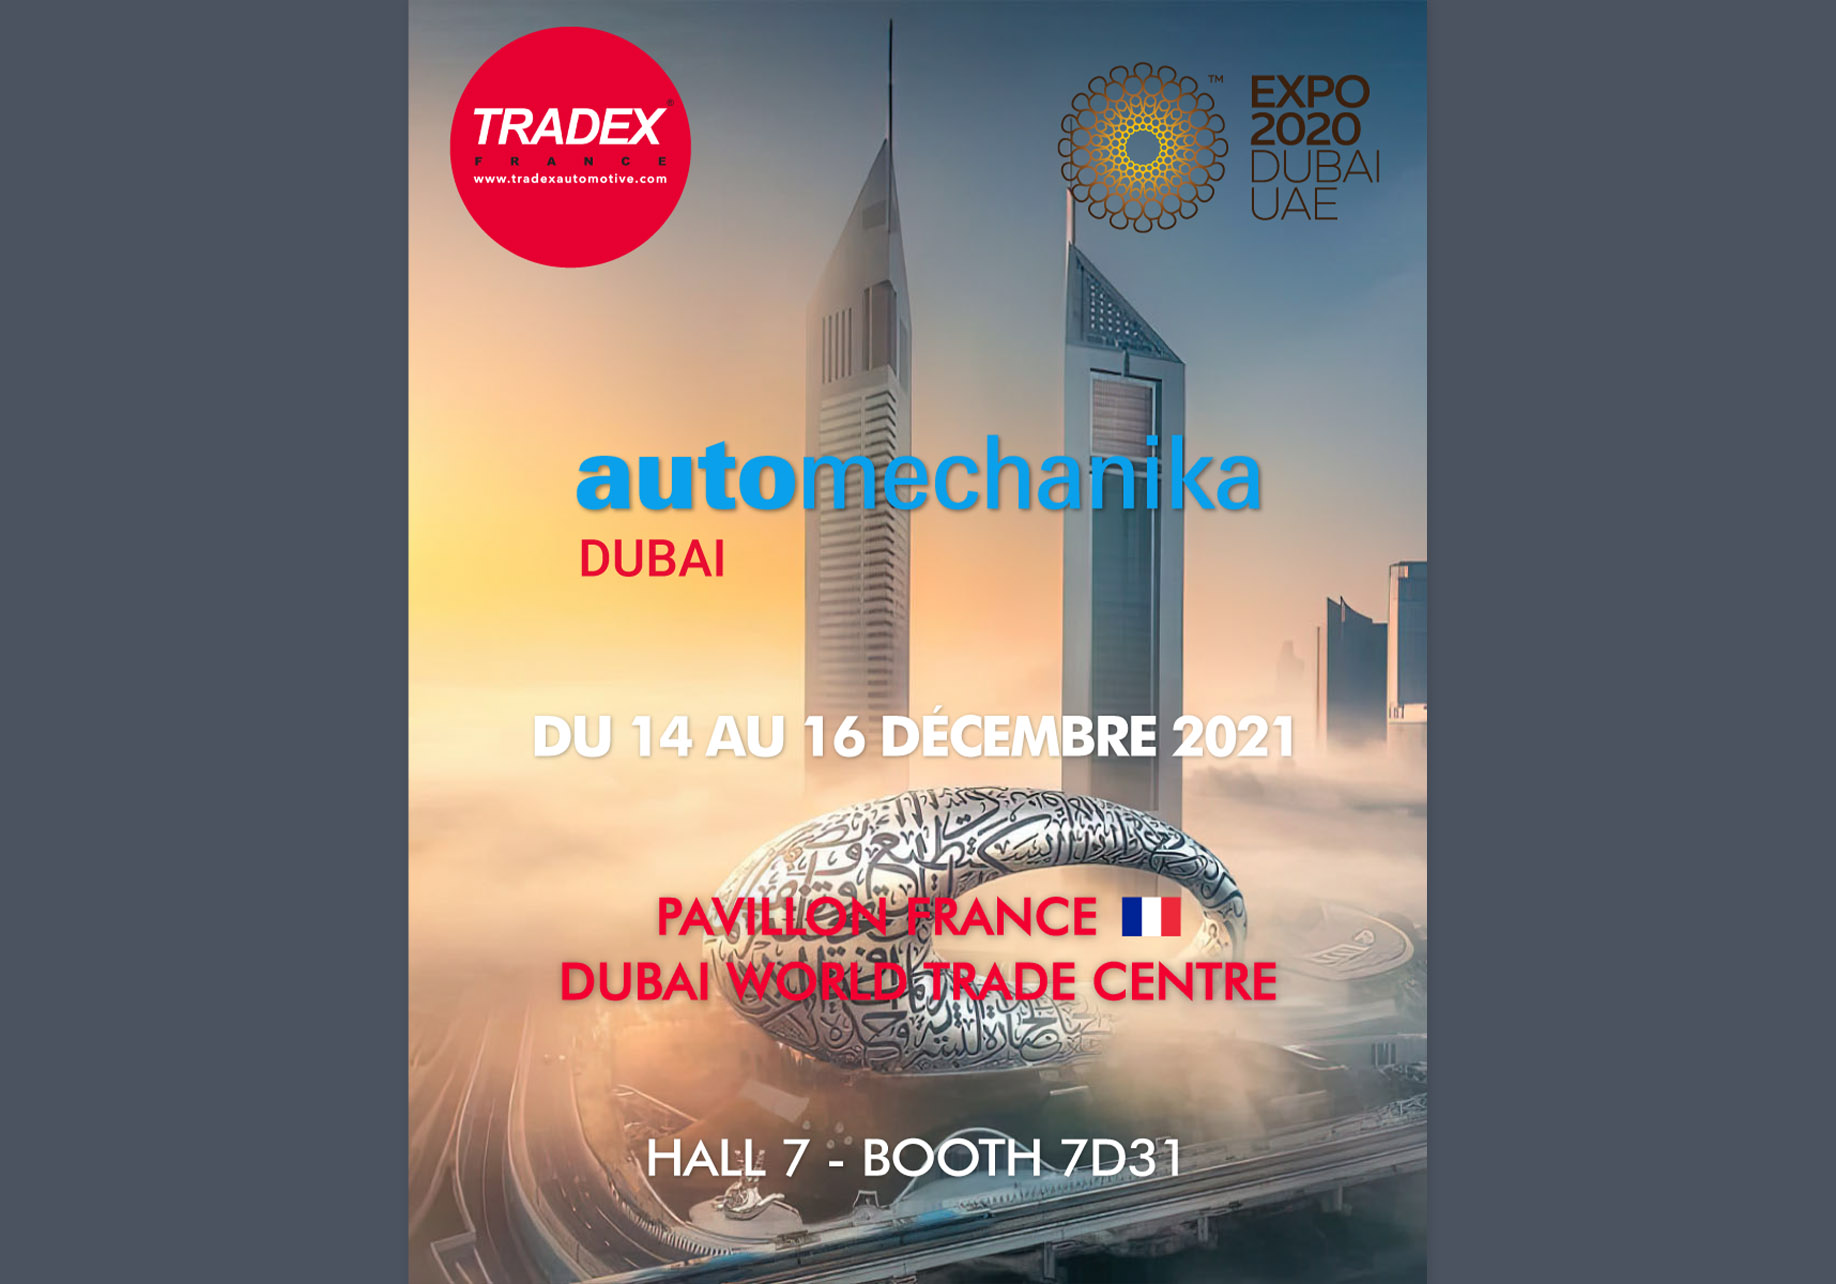 Balloo Web Agency – Tradex Automechanika Dubai 2021 J-5 LinkedIn